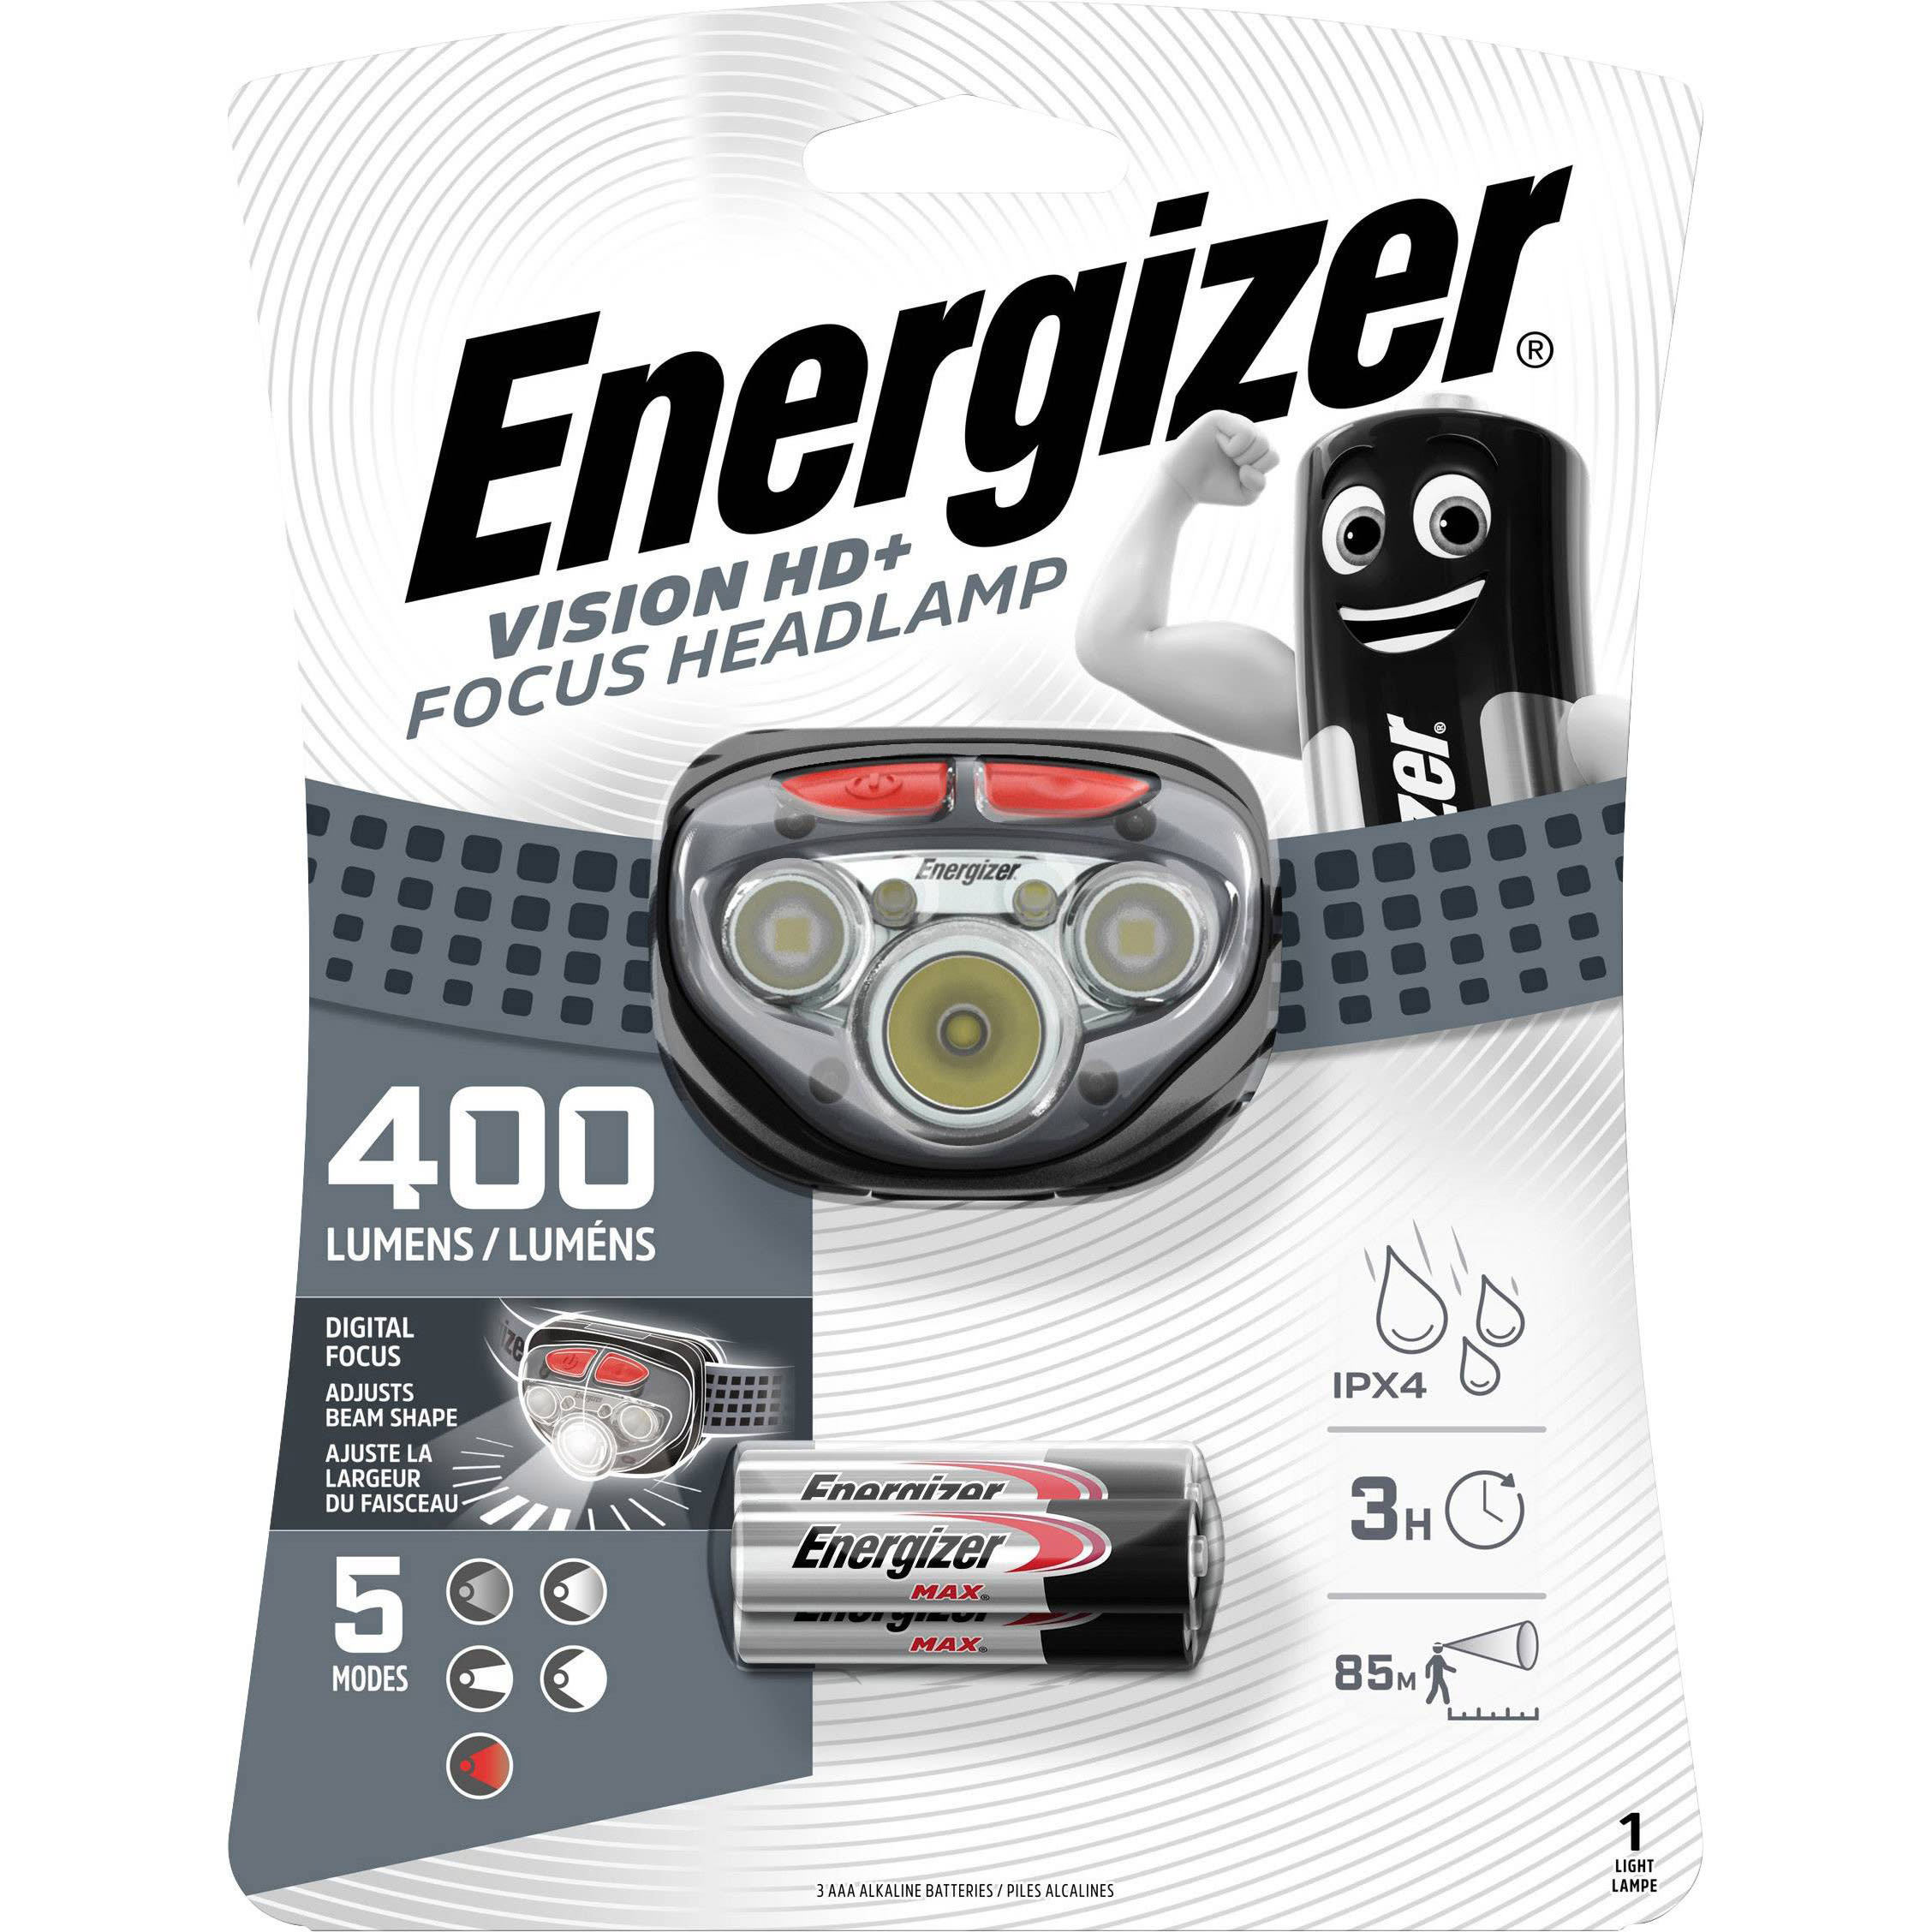 Energizer - Hoofdlamp 5 LED Vision HD+ Focus, 400/45/180lm, bereik 85/30m, IPX4 + 3x AAA